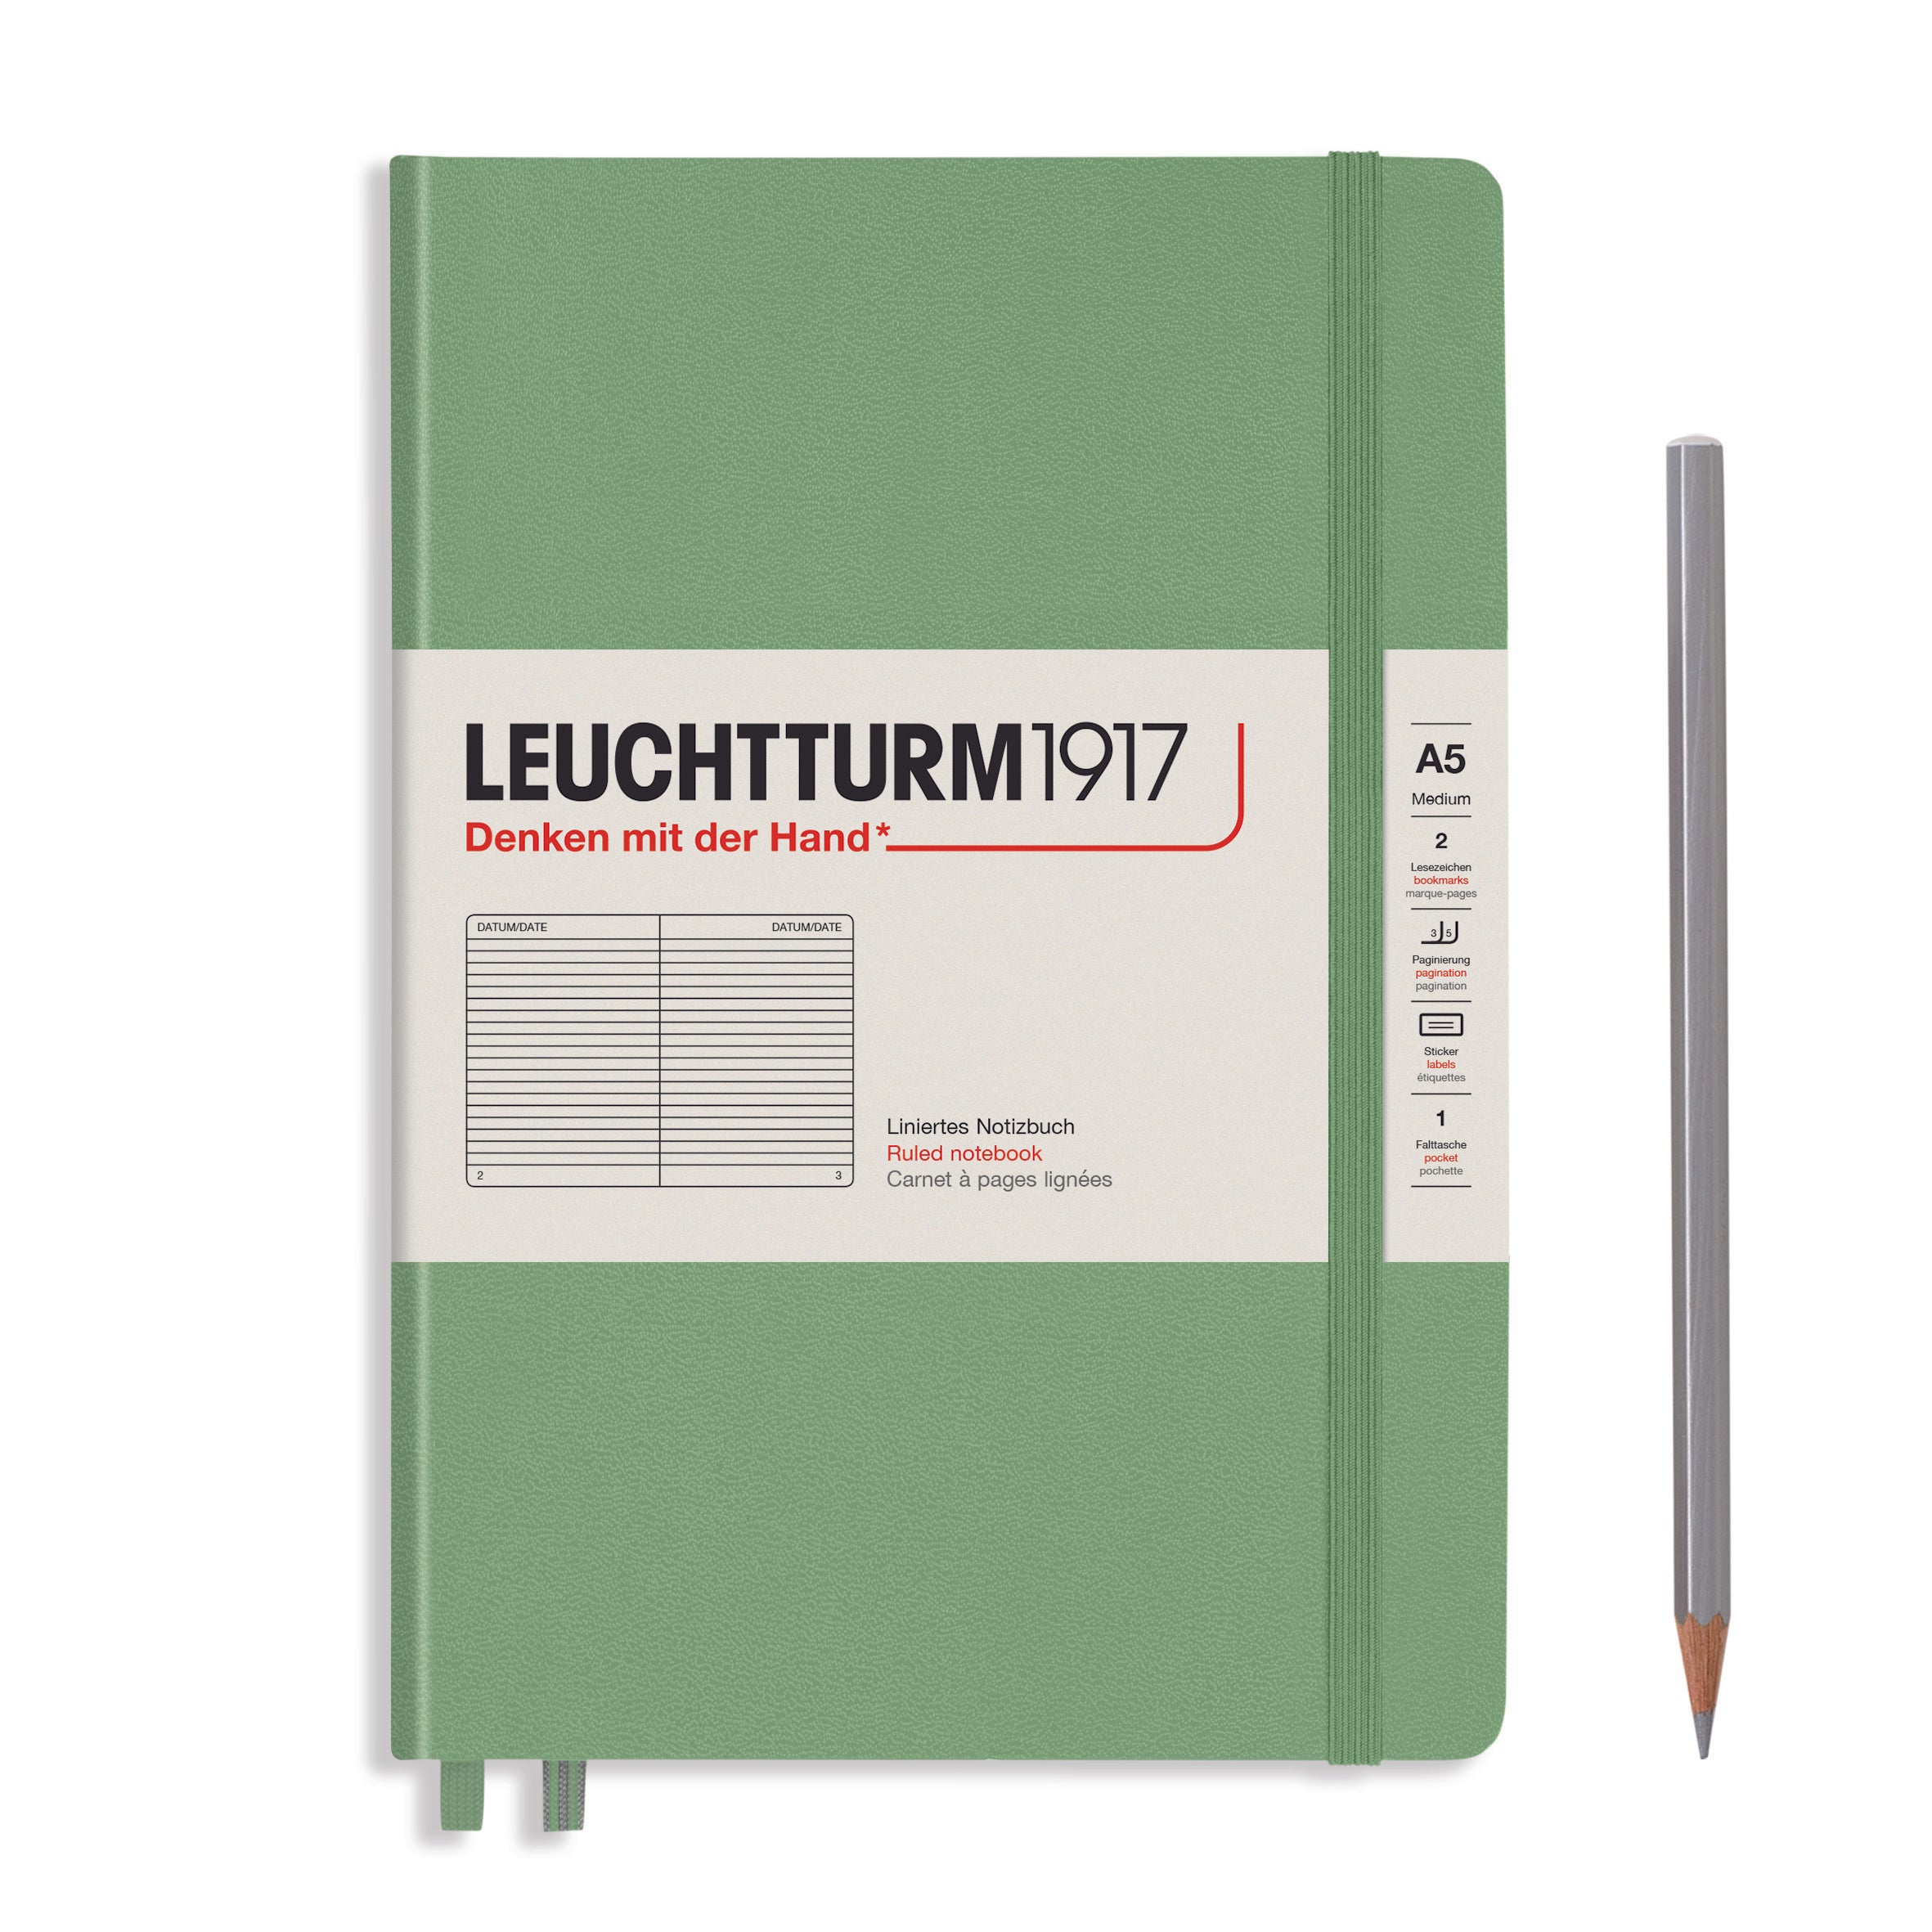 Leuchtturm medium gelinieerd notitieboek (A5) hardcover